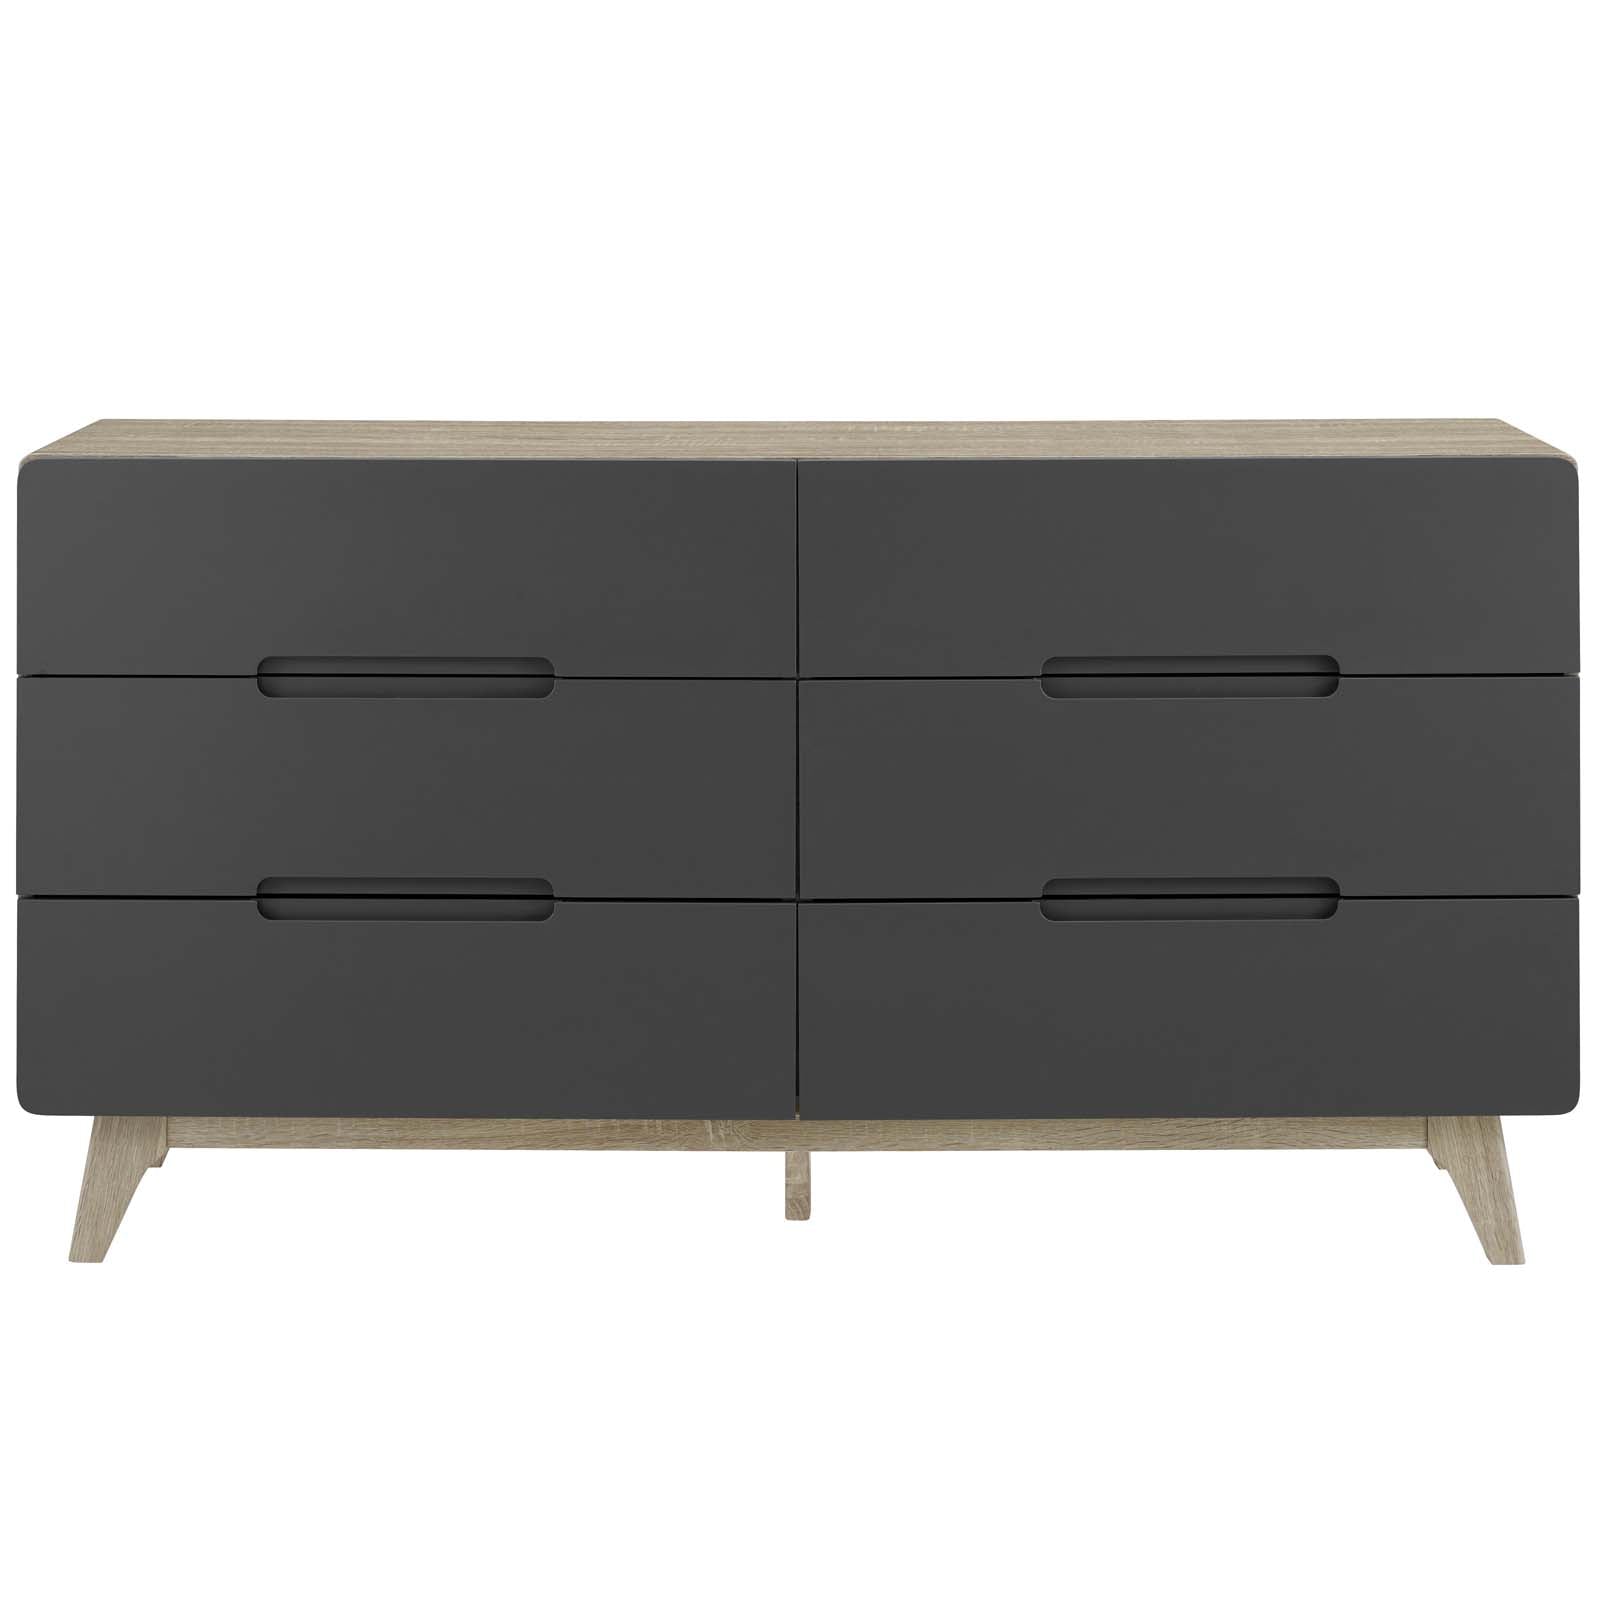 Origin Six-Drawer Wood Dresser